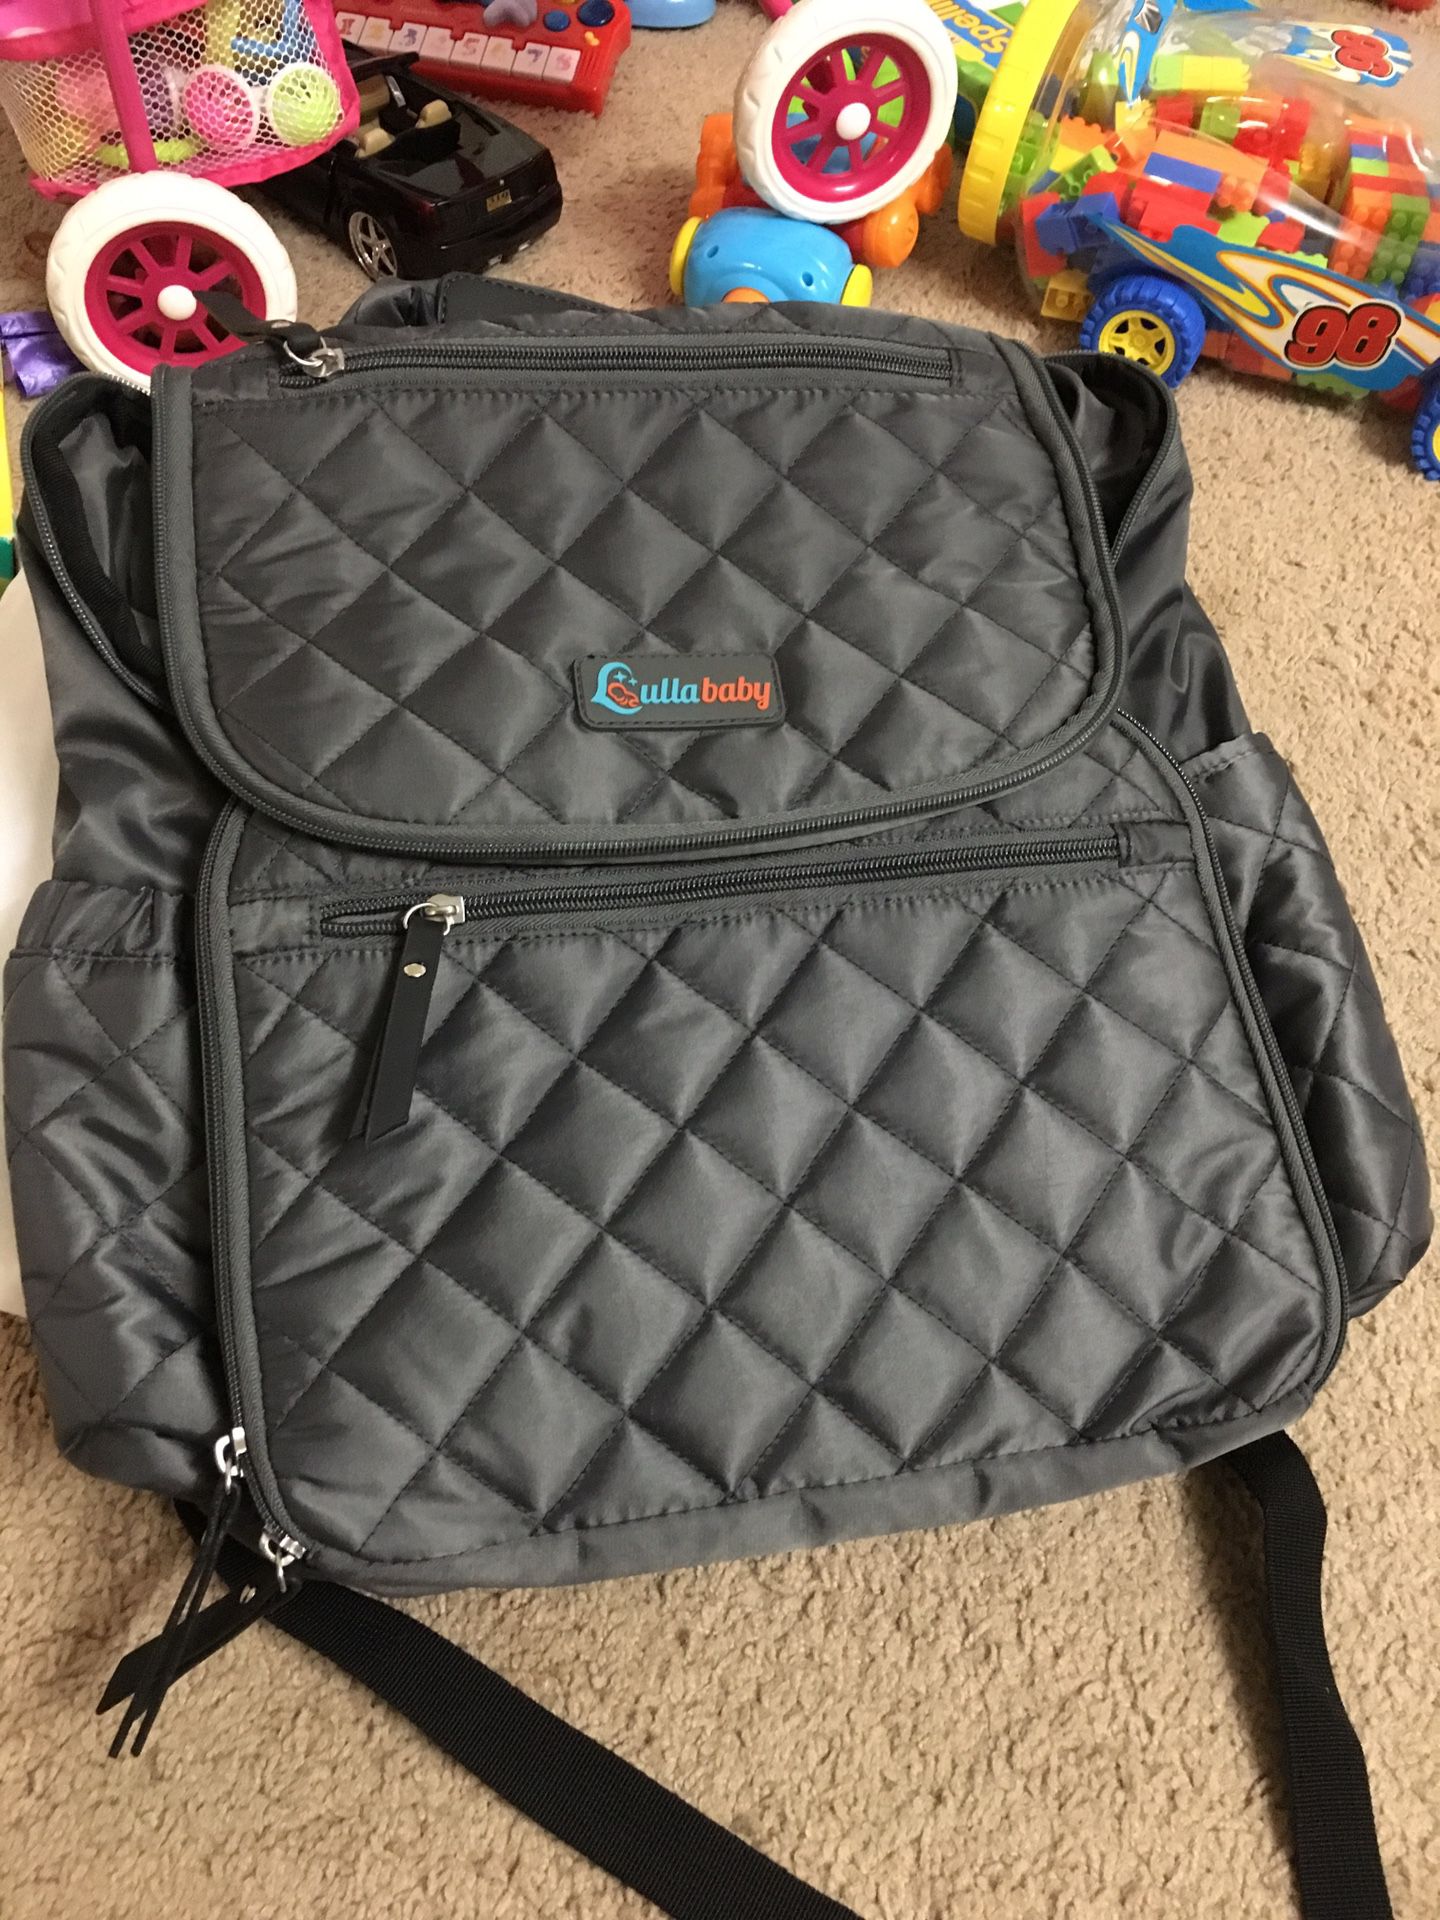 Lullababy diaper bag(backpack).